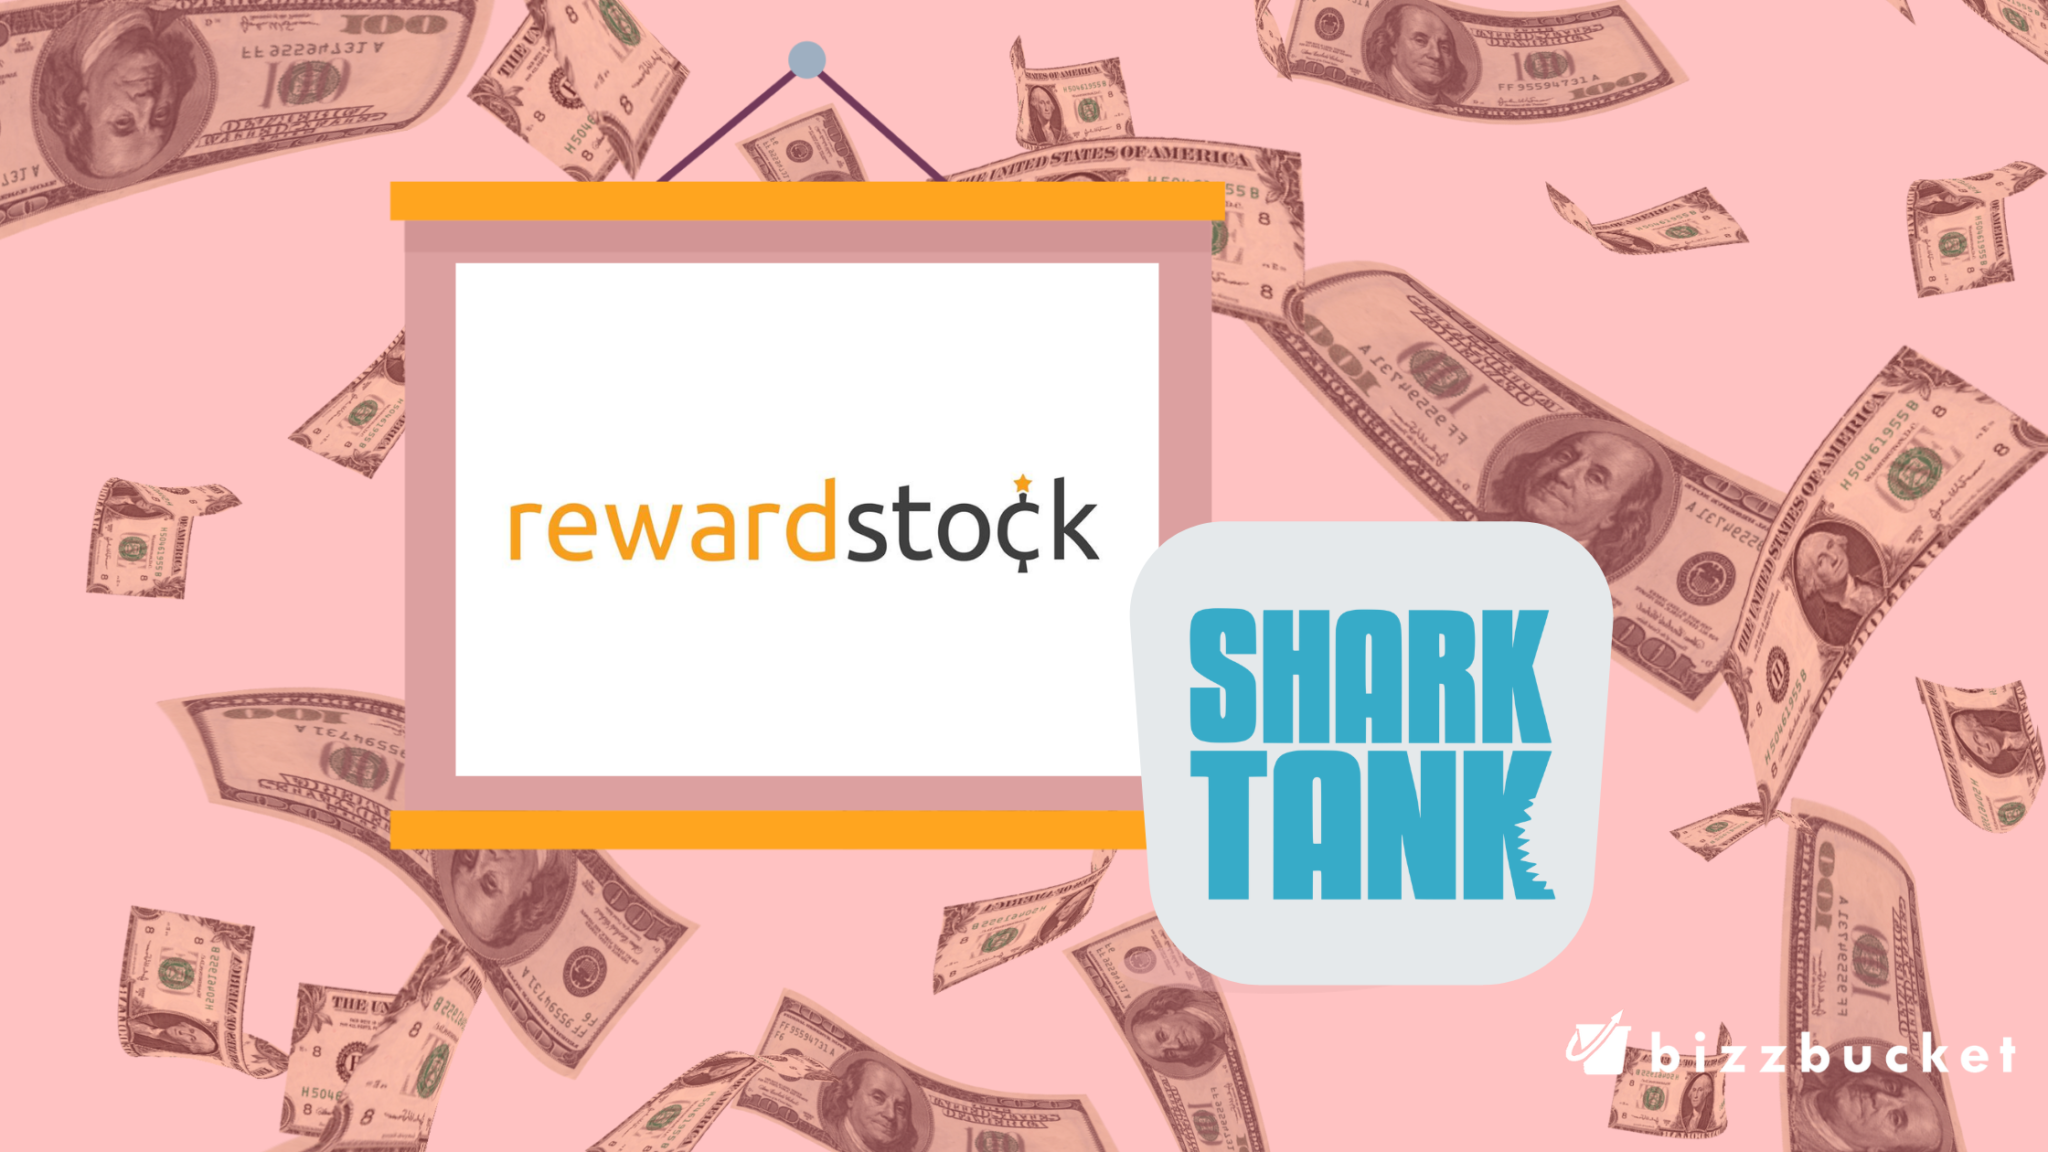 What Happened to Reward Stock After Shark Tank? BizzBucket